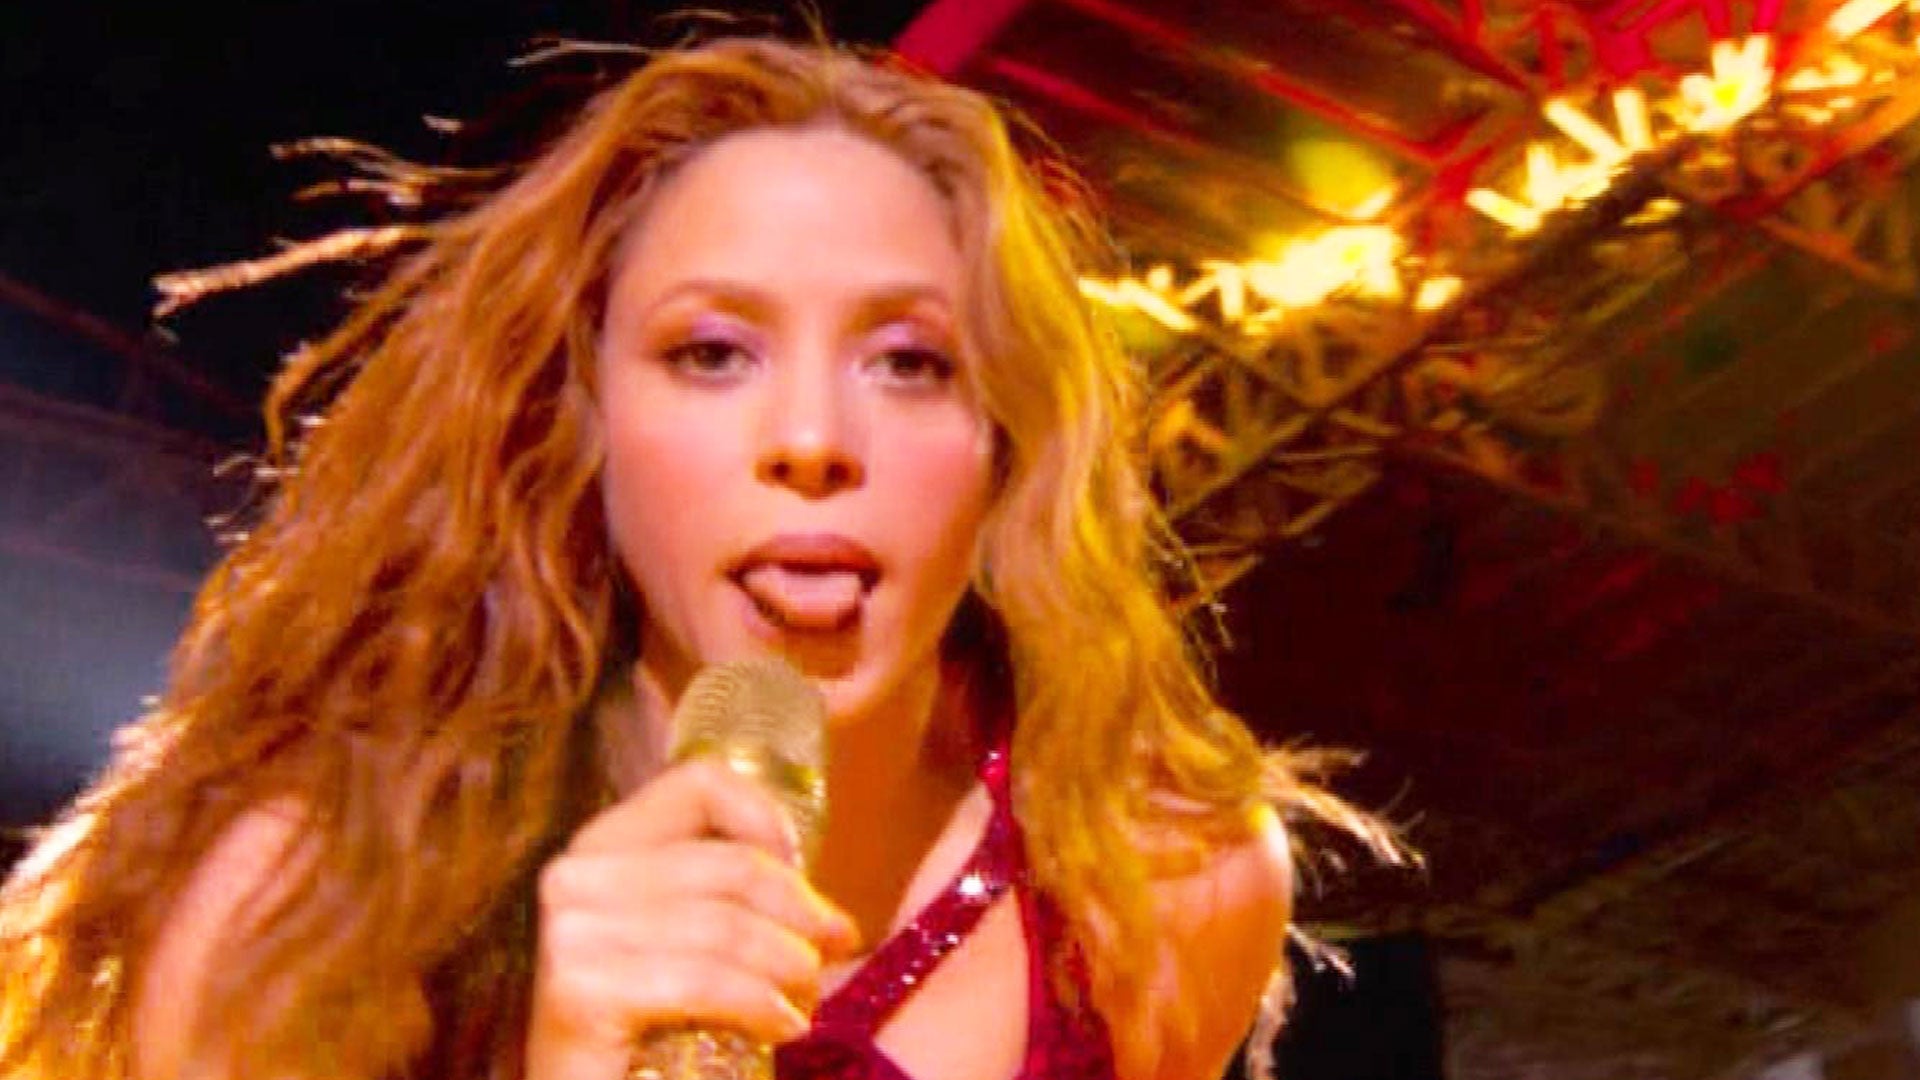 Shakira Shakira S Best Live Vocals Youtube Born 2 february 1977) is